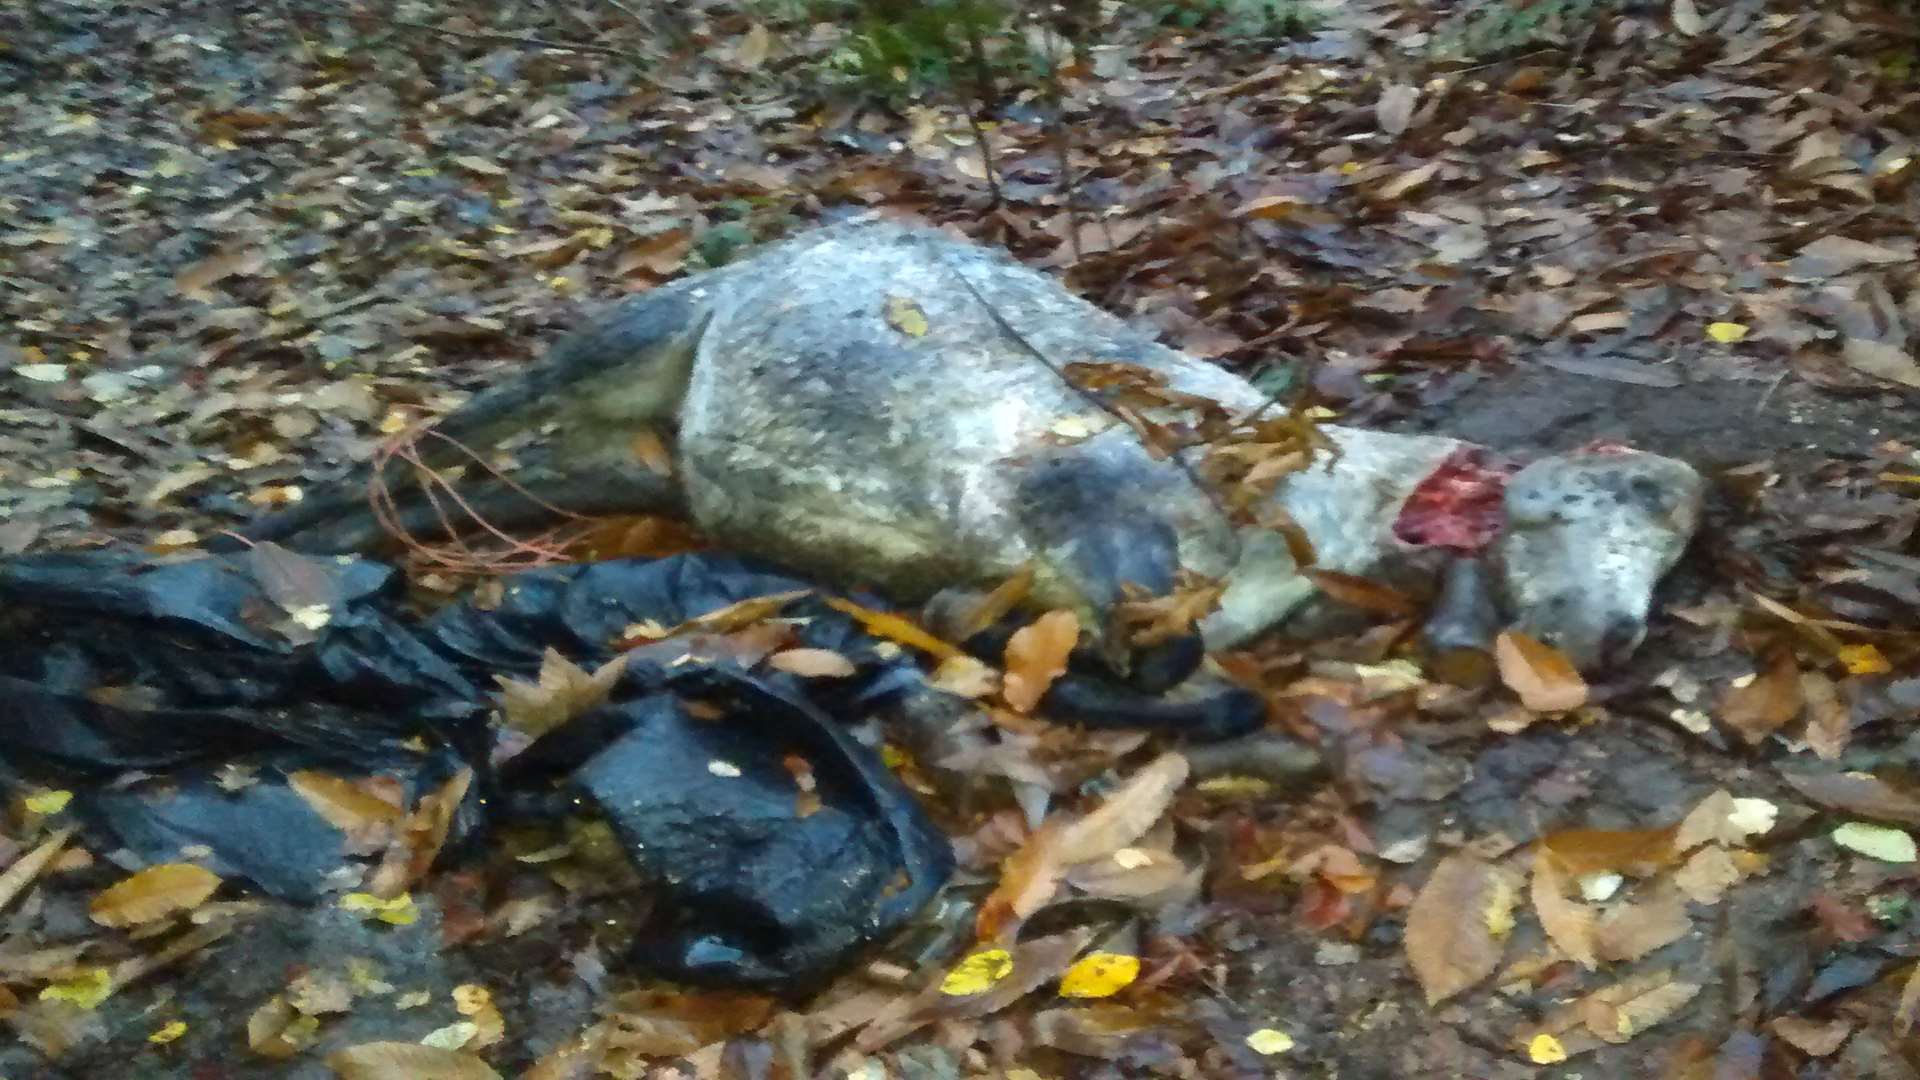 Dead pony found dumped on a woodland path in Wateringbury, Maidstone